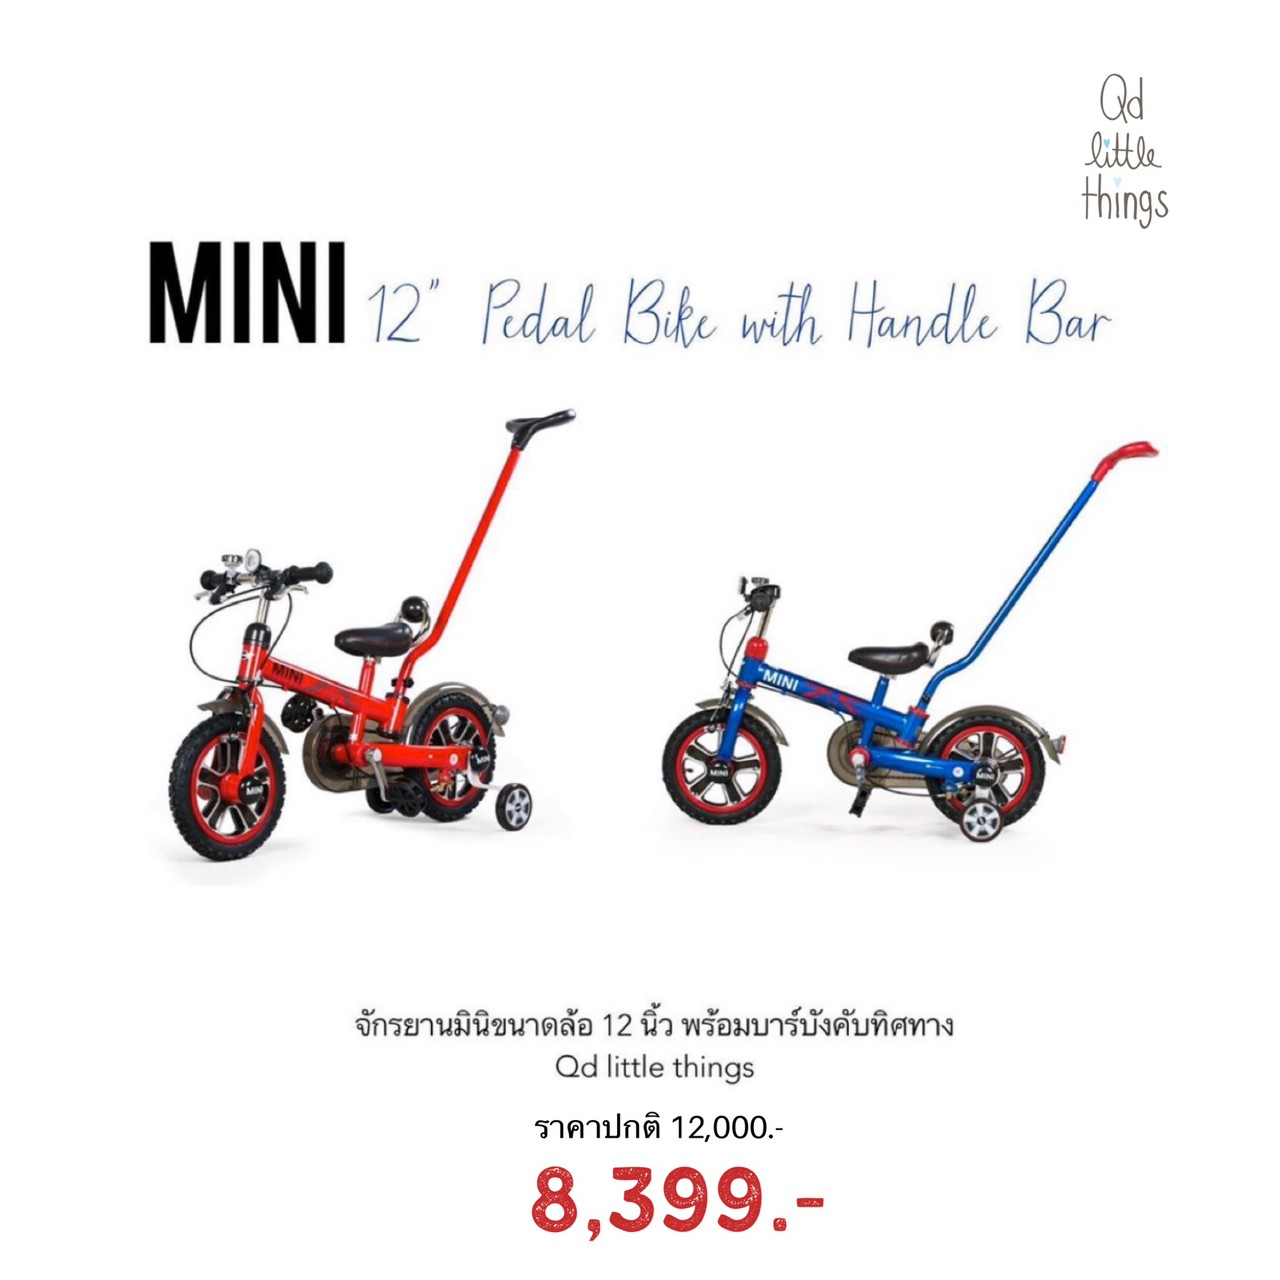 Mini - 12” Pedal Bike with Handle Bar 